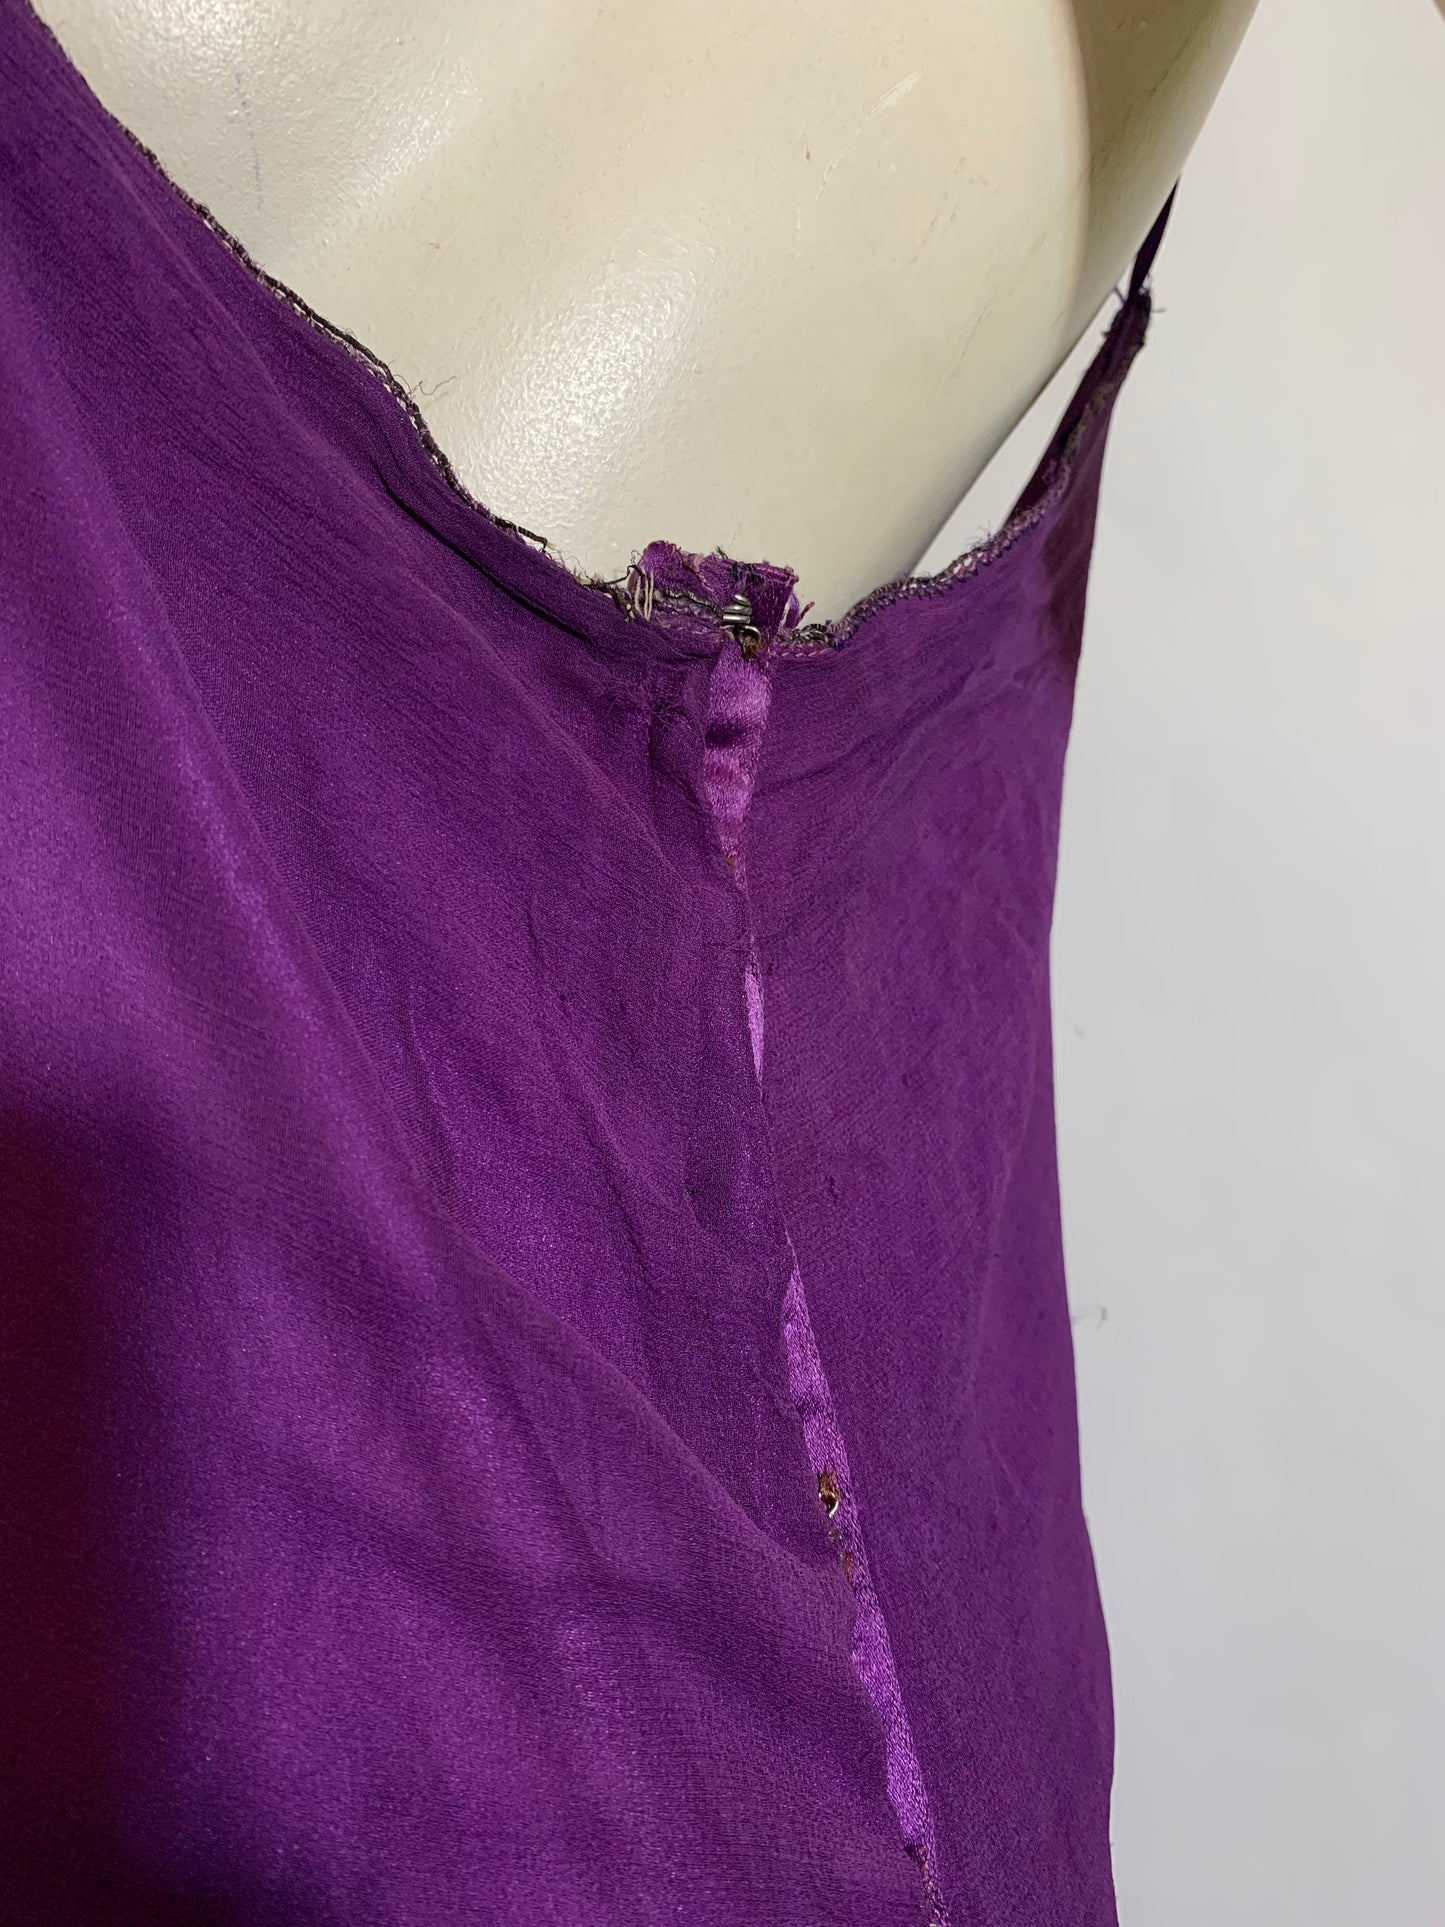 Vivid Violet Two Piece Beaded Silk Chiffon Dress circa 1920s